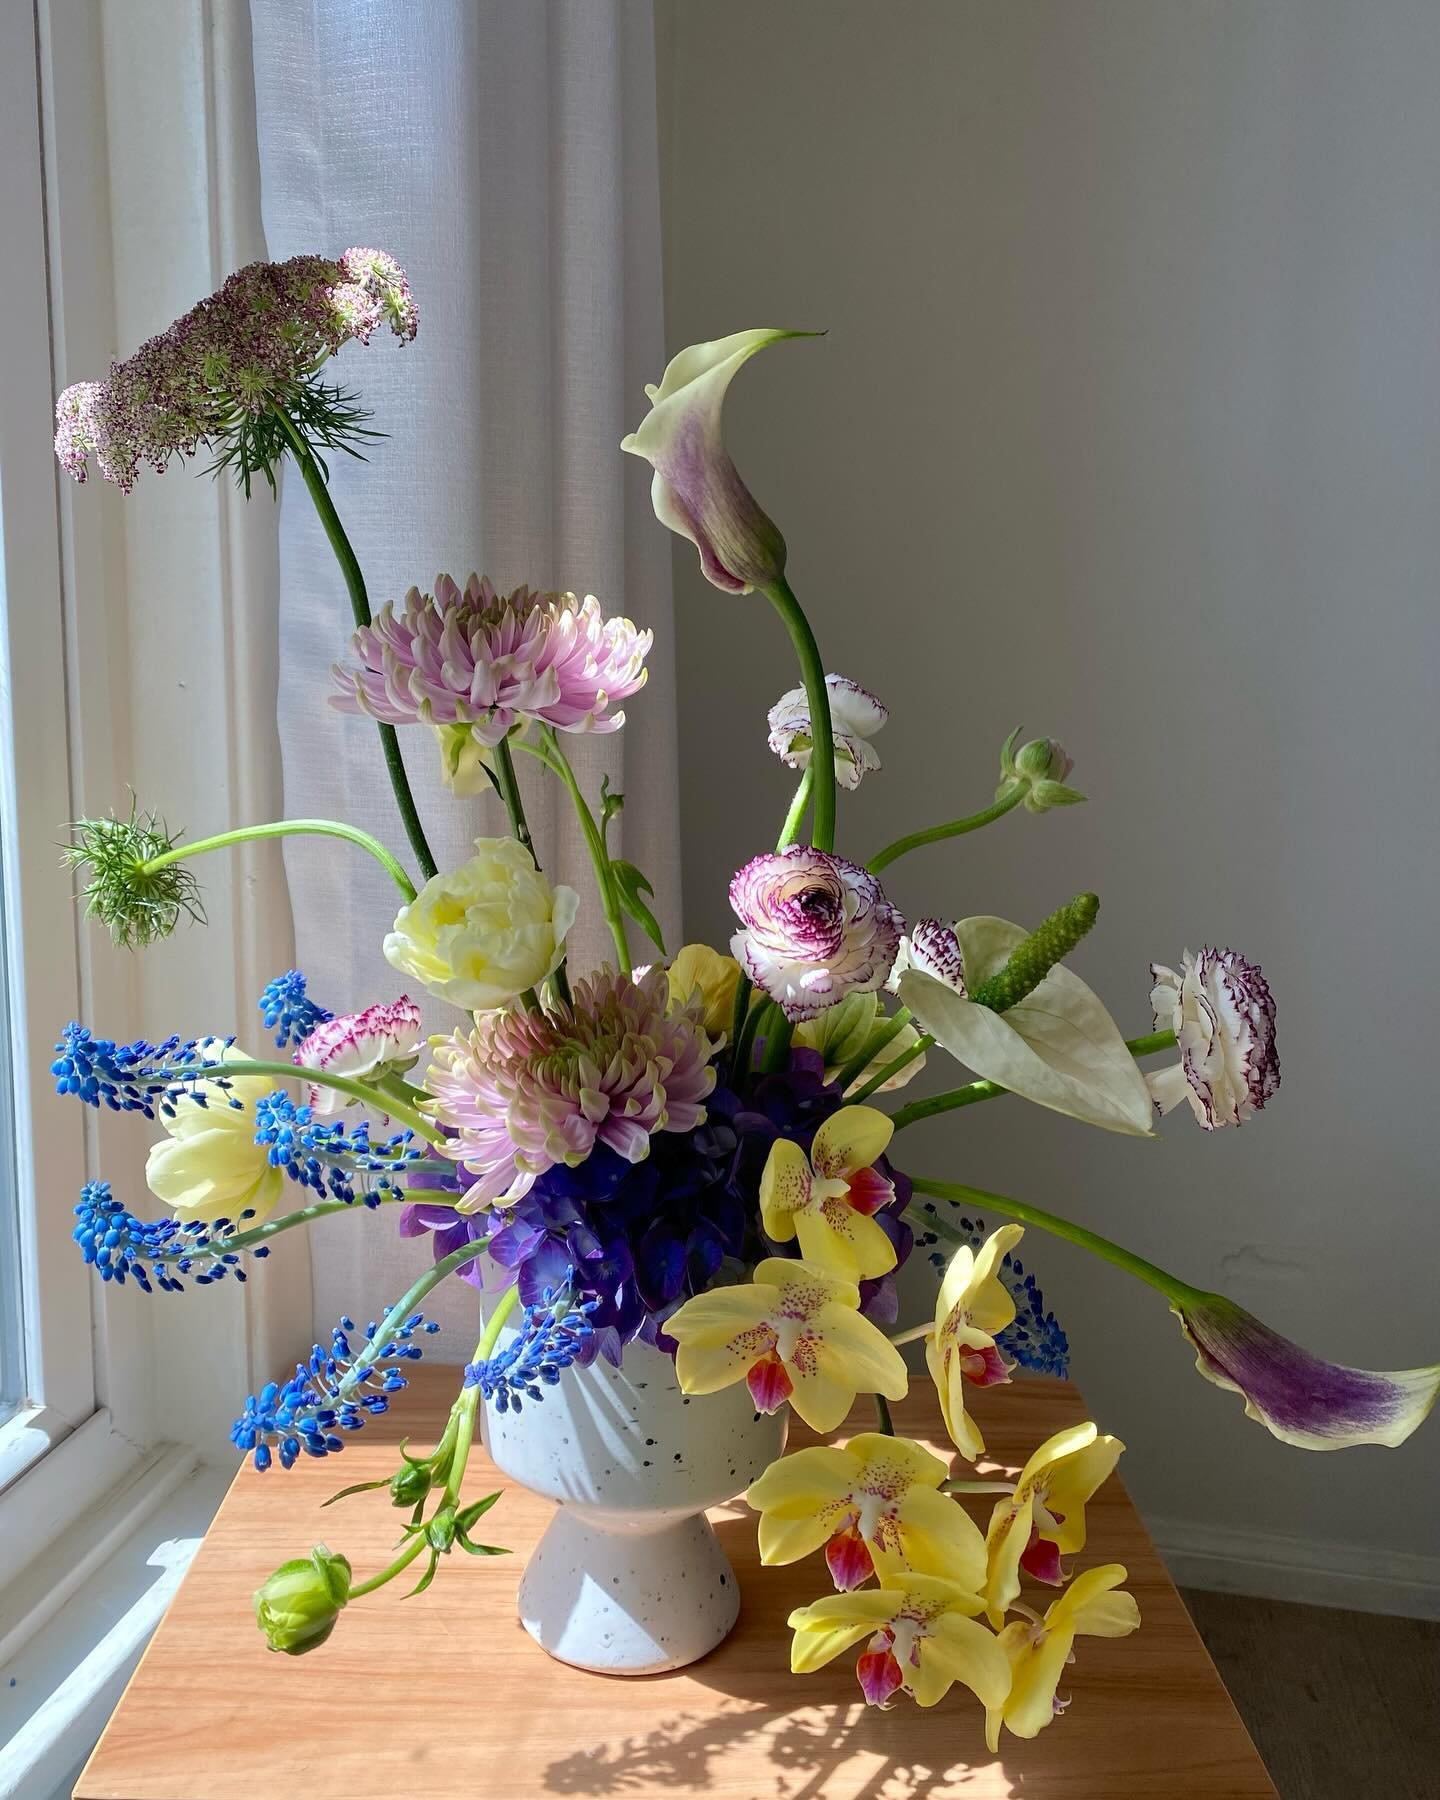 Taurus arrangement 🪻🍋🦄🩰🌀
.
.
.
.
.
#taurusszn #flowerarrangments #sdflorist #orchidarrangements #sandiegoflorist #mothersdayflower #orderflowers #queenofvase